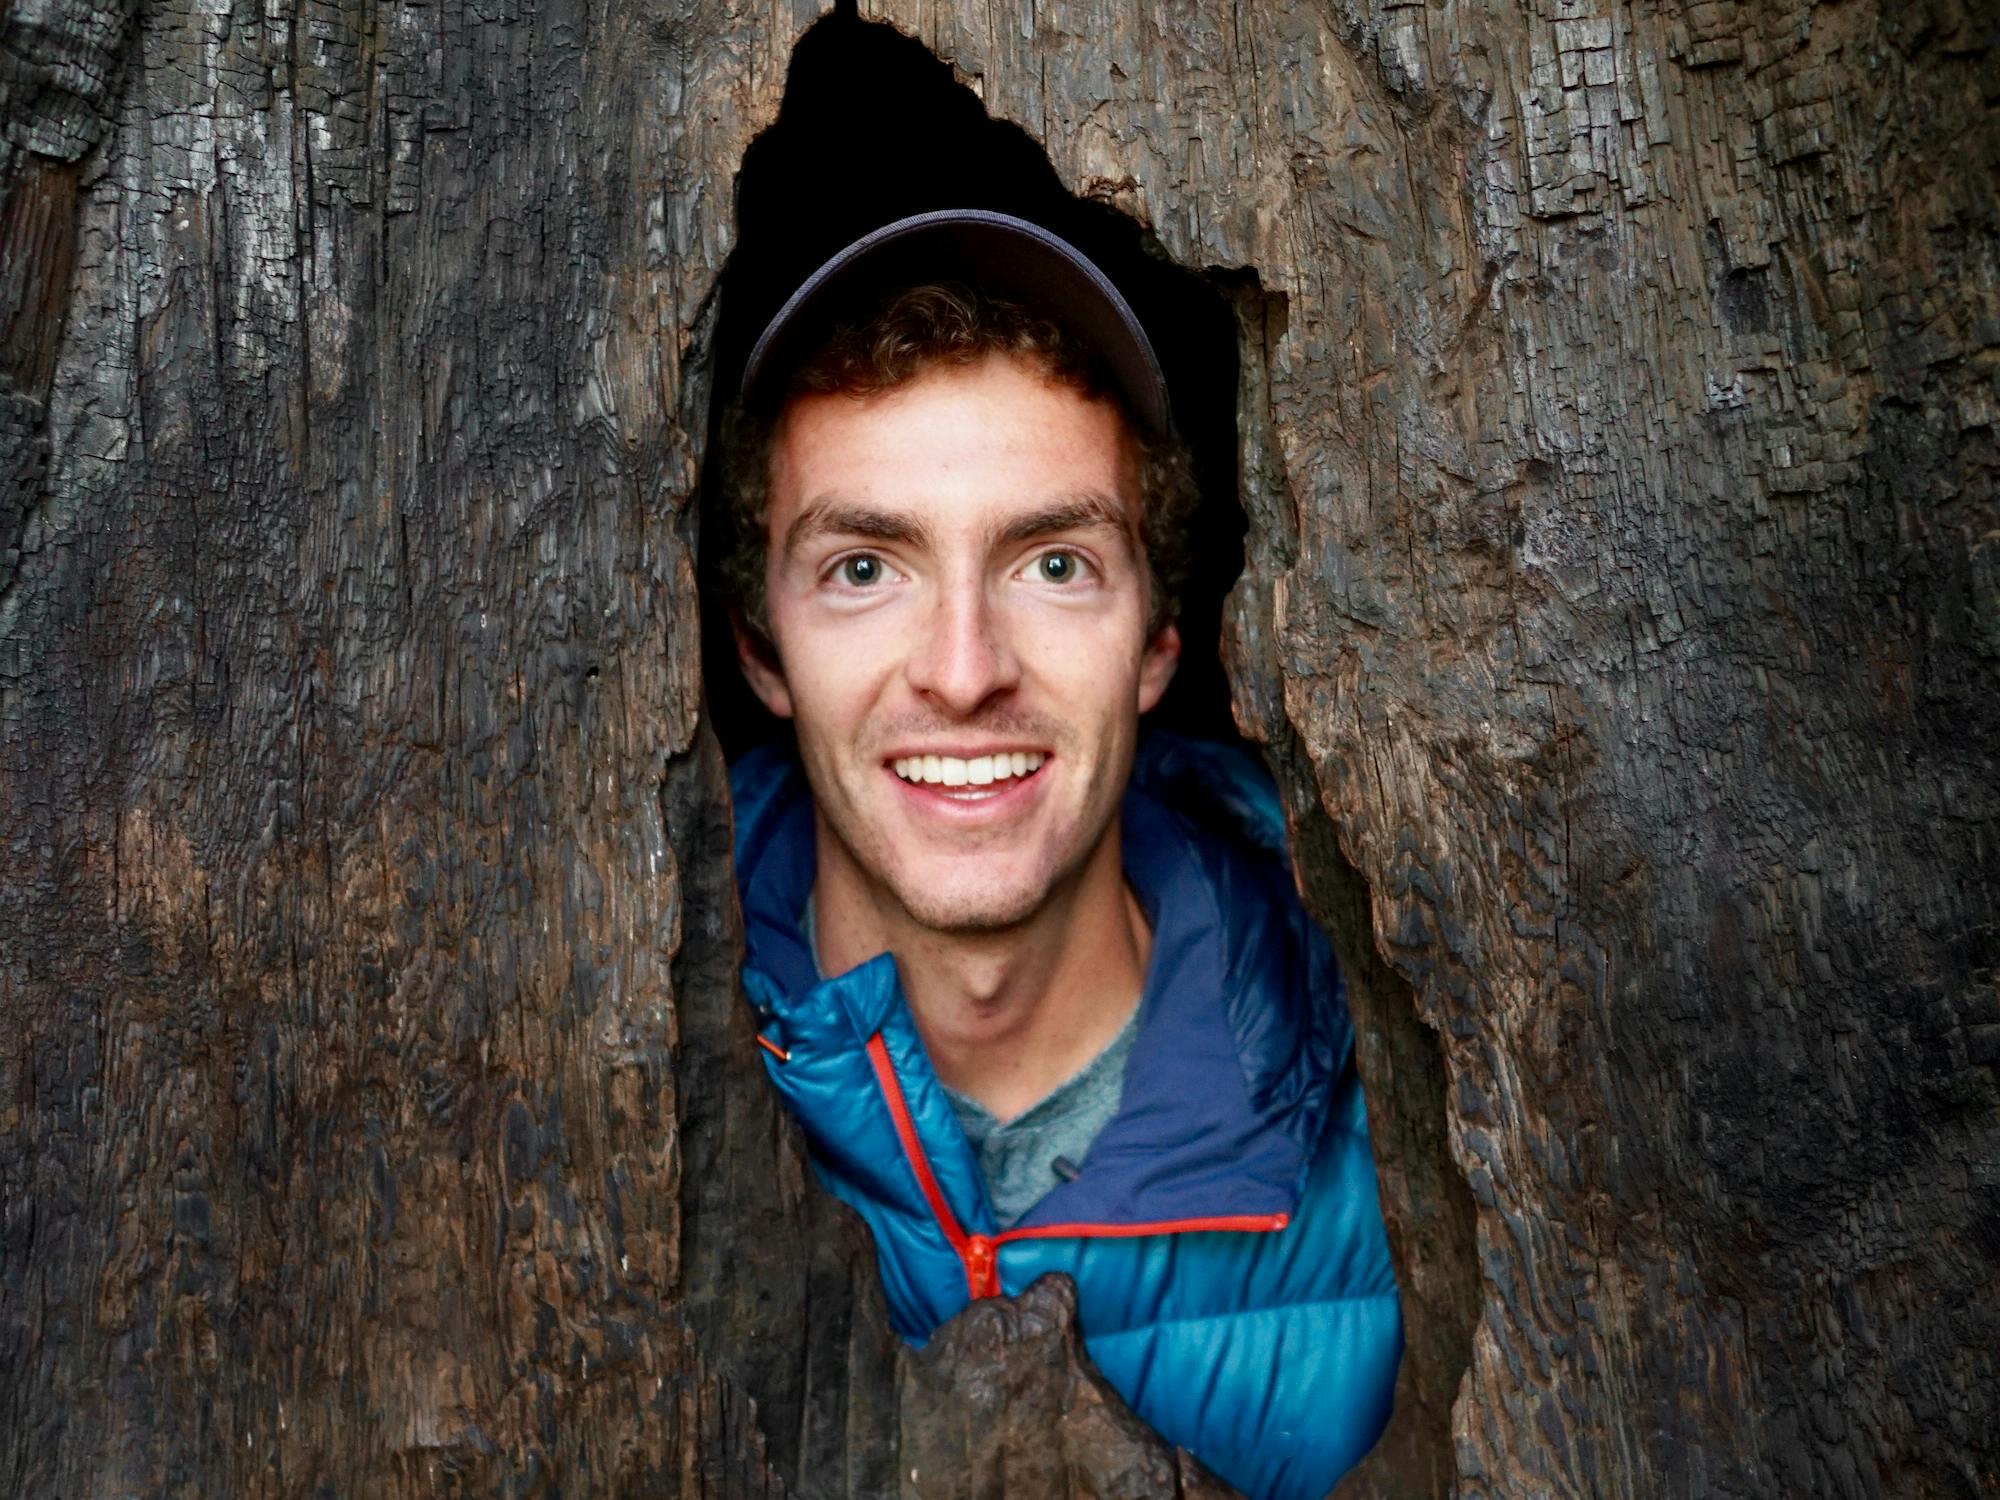 Smiling male peering through tree trunk